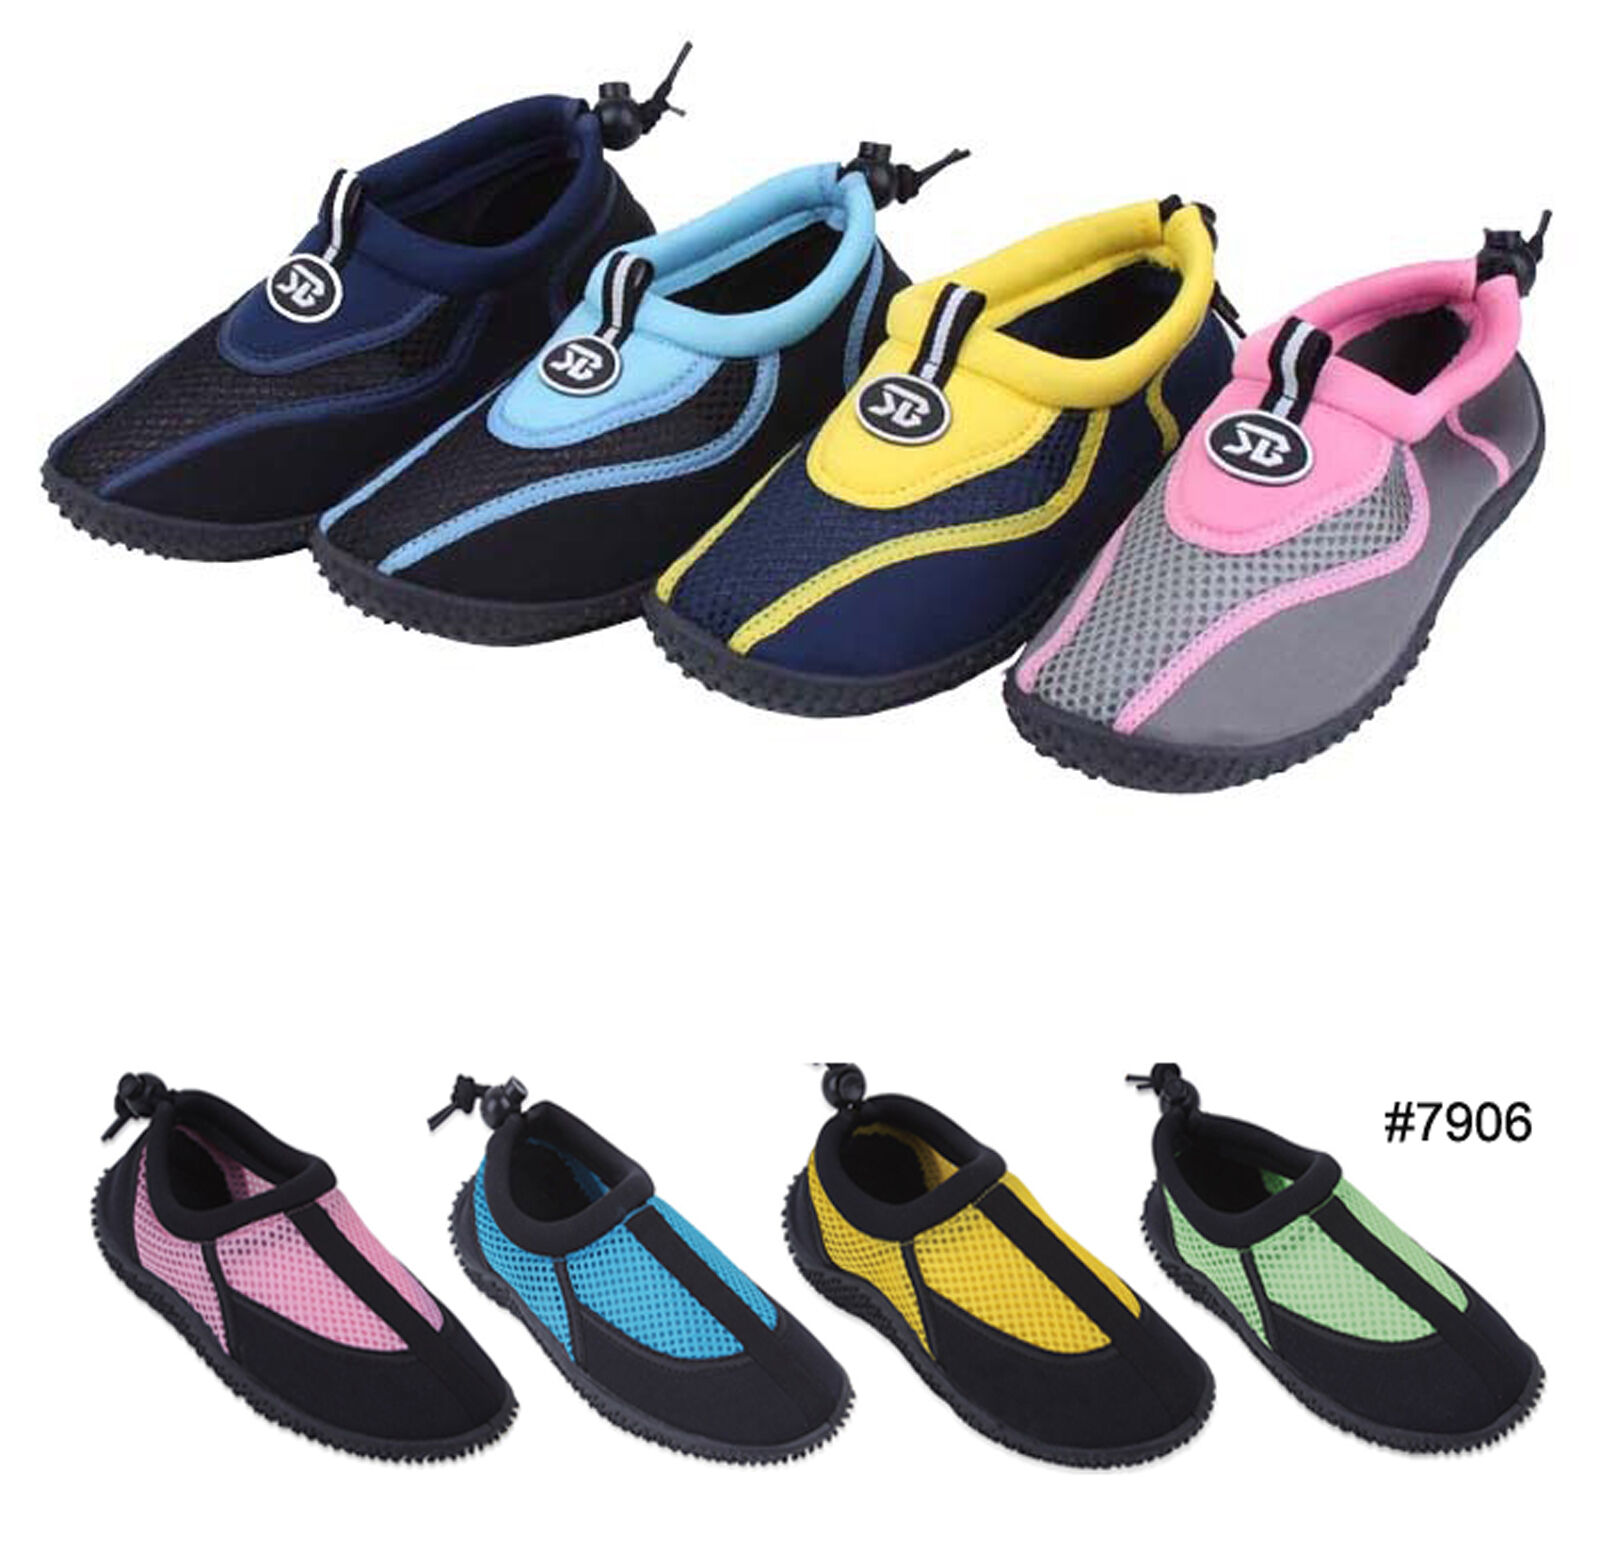 New Childrens Kids Boys Girls Slip On Water Shoes/aqua Socks/pool Beach,4 Colors